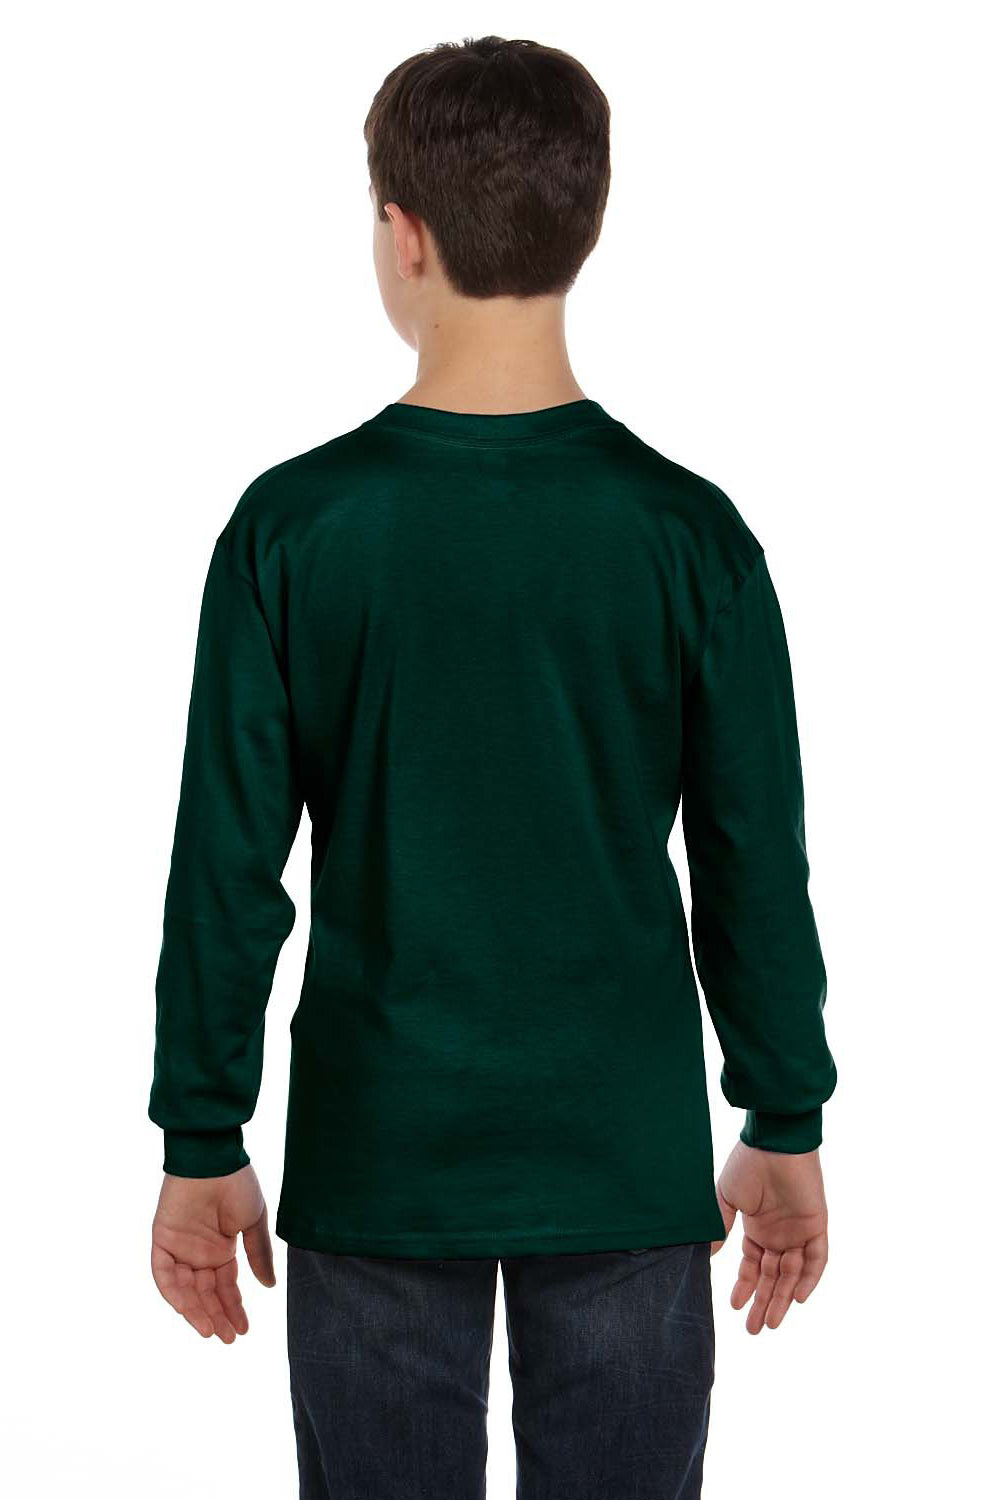 Gildan G540B Youth Long Sleeve Crewneck T-Shirt Forest Green Back